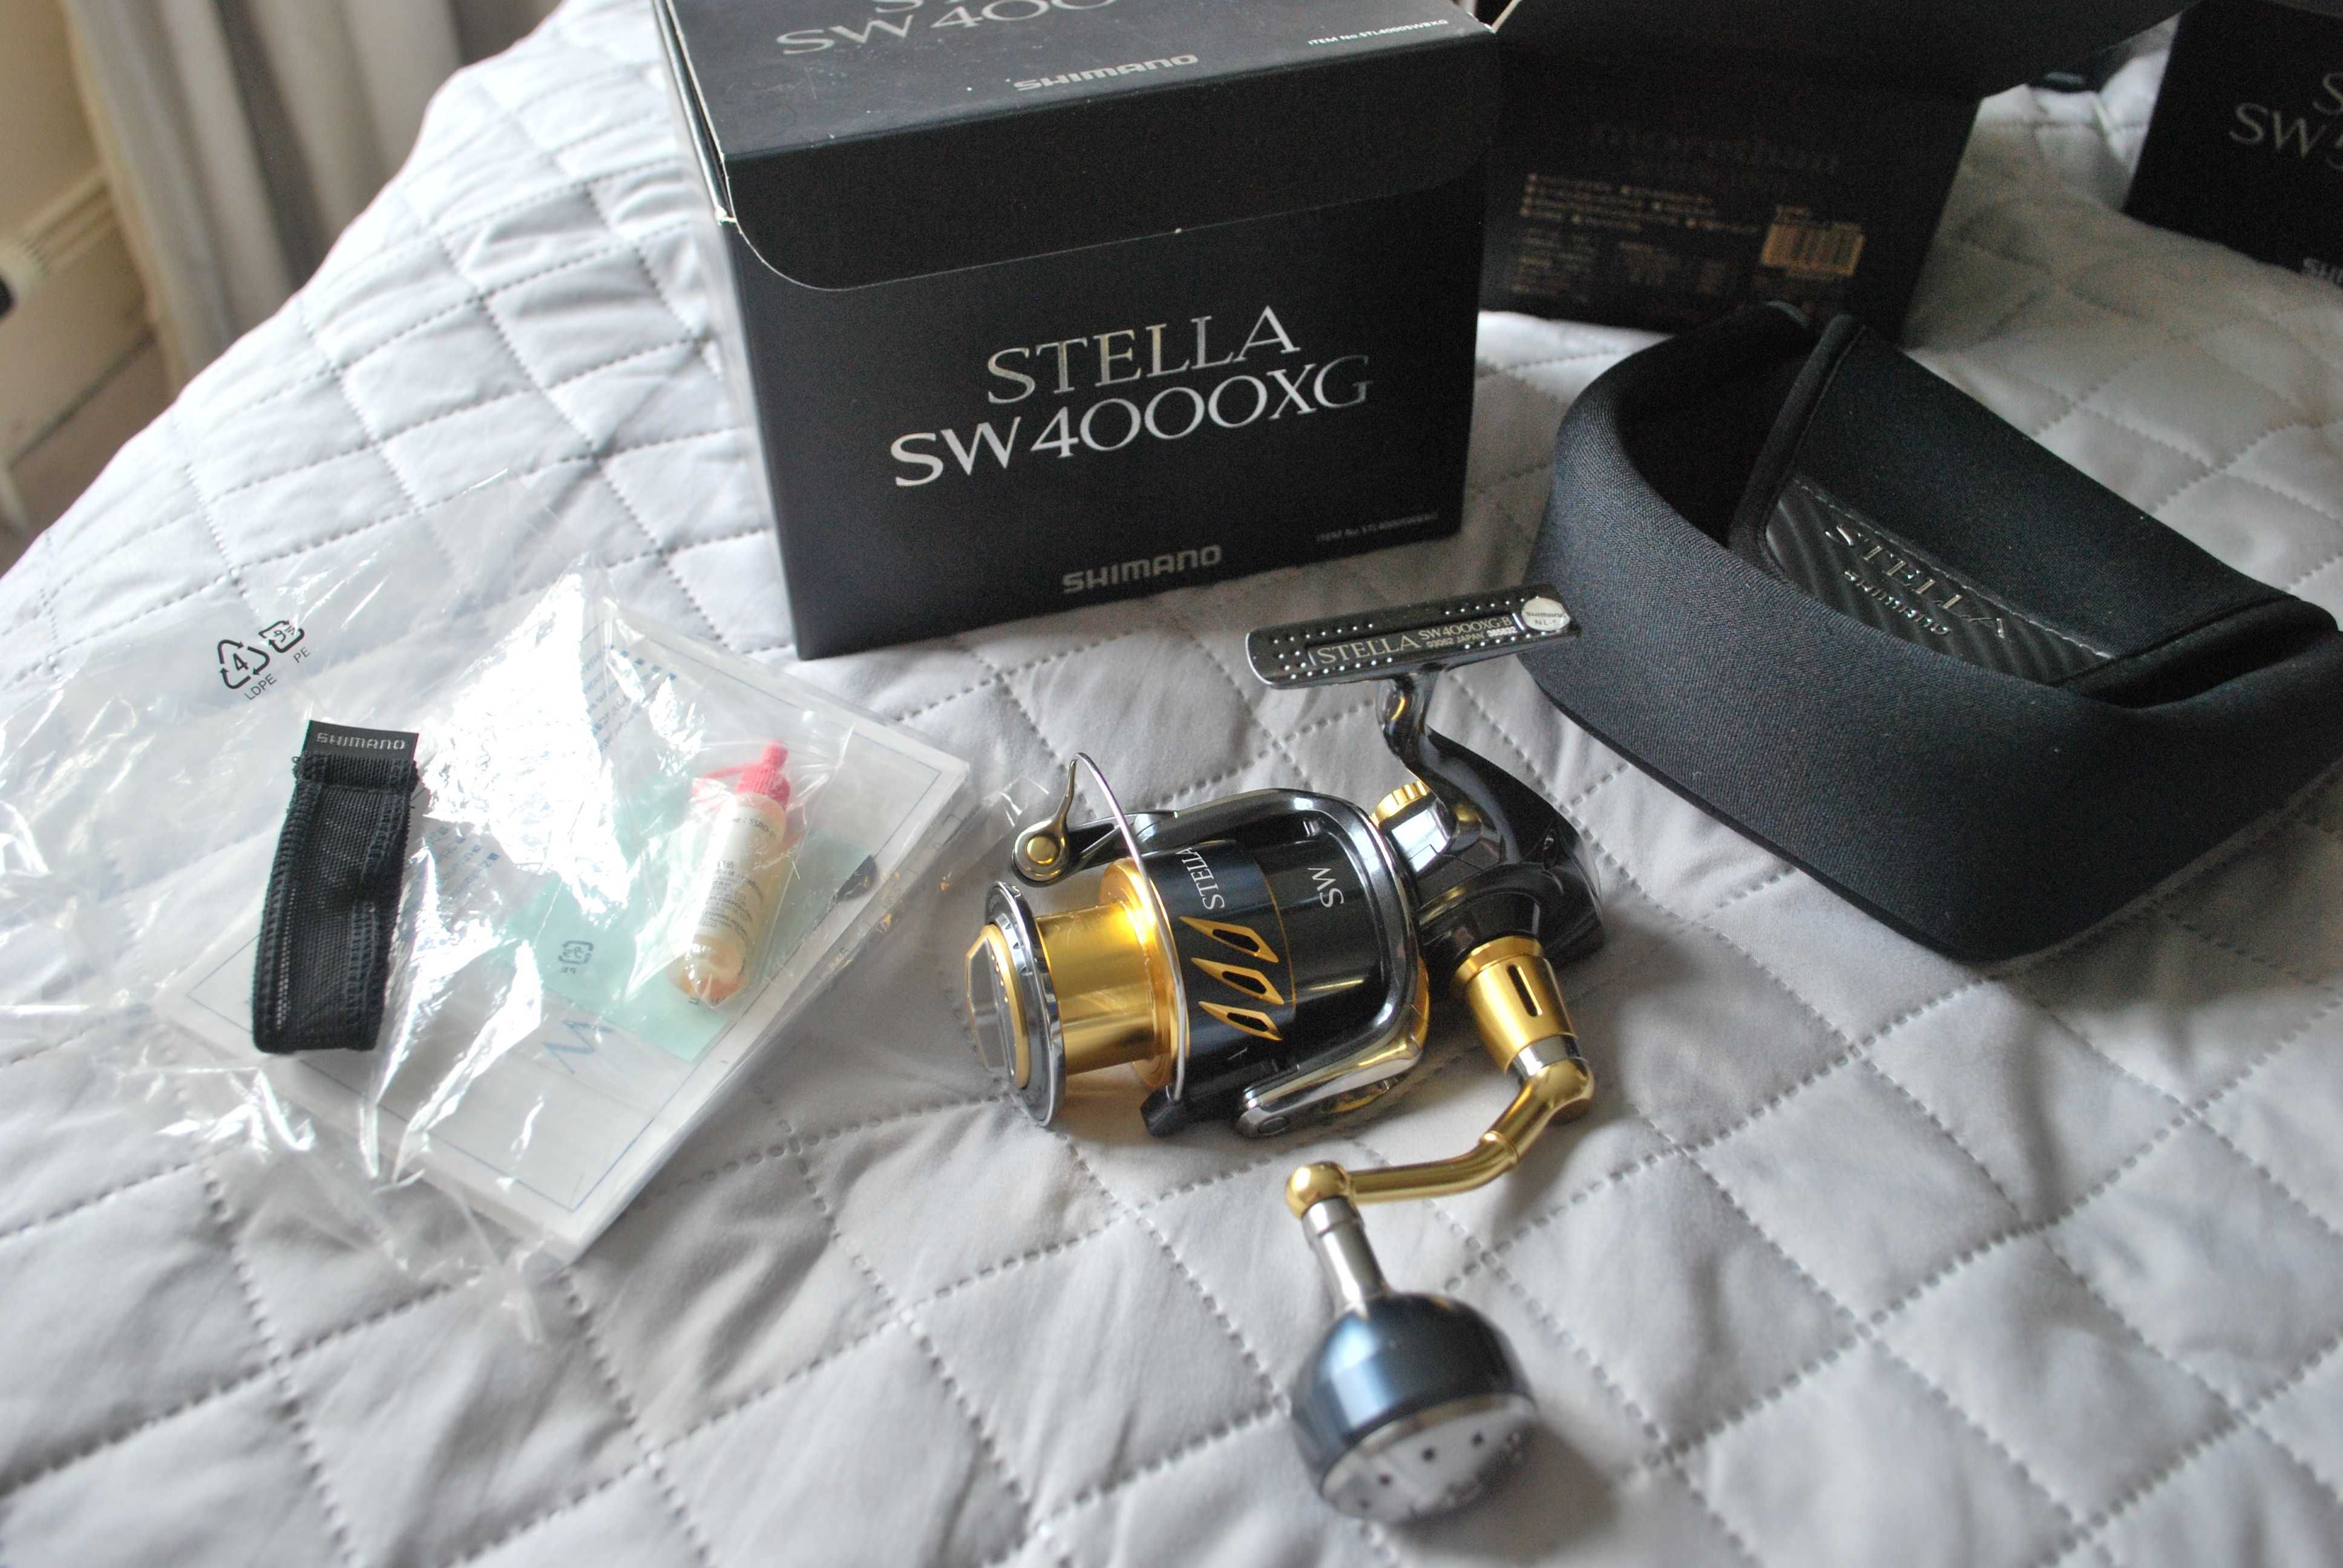 Shimano Stella SW 4000 XG